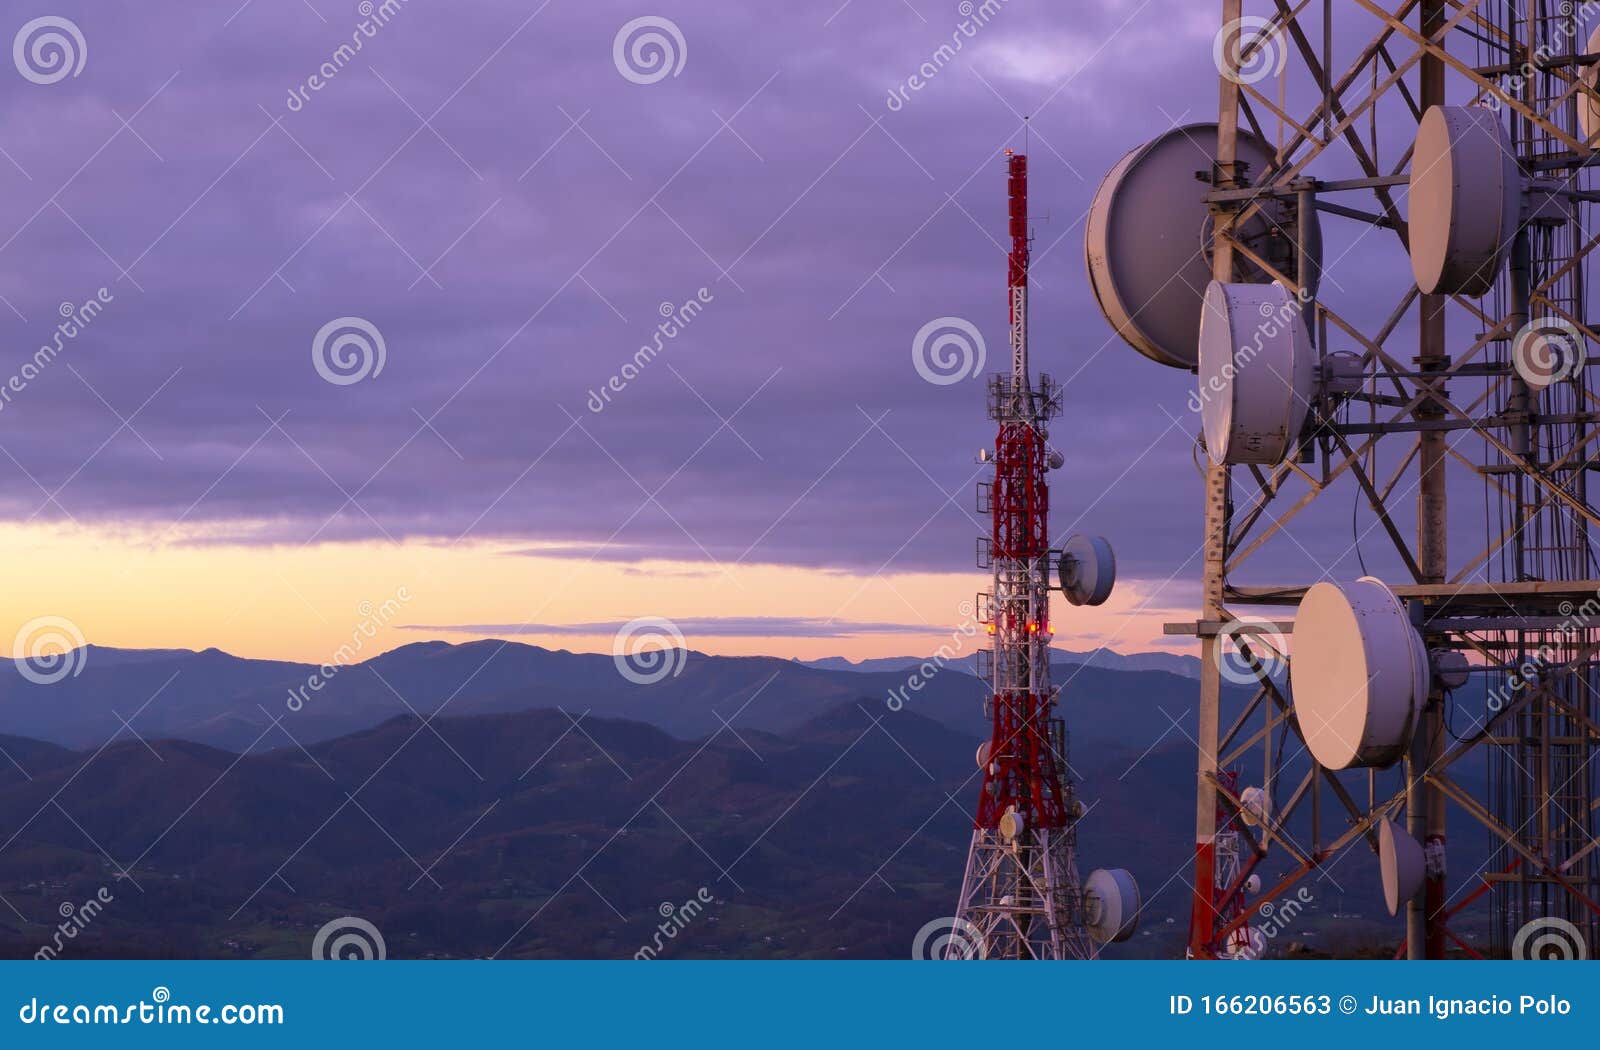 communications and telephone towers on mount jaizkibel, euskadi